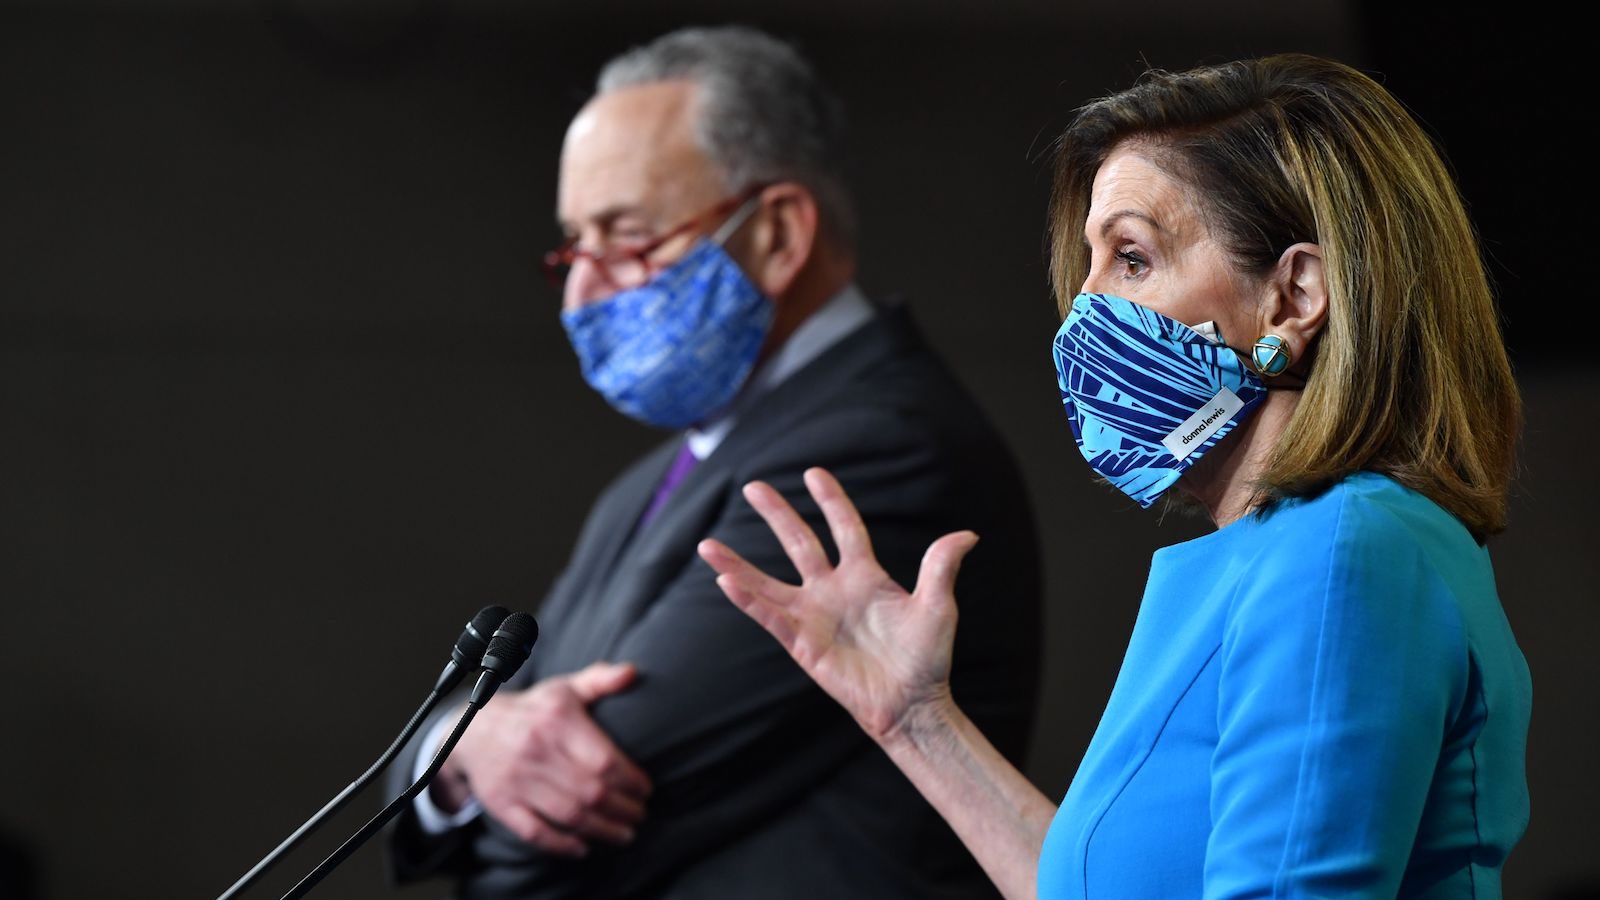 photo of Nancy Pelosi and Chuck Schumer in COVID masks